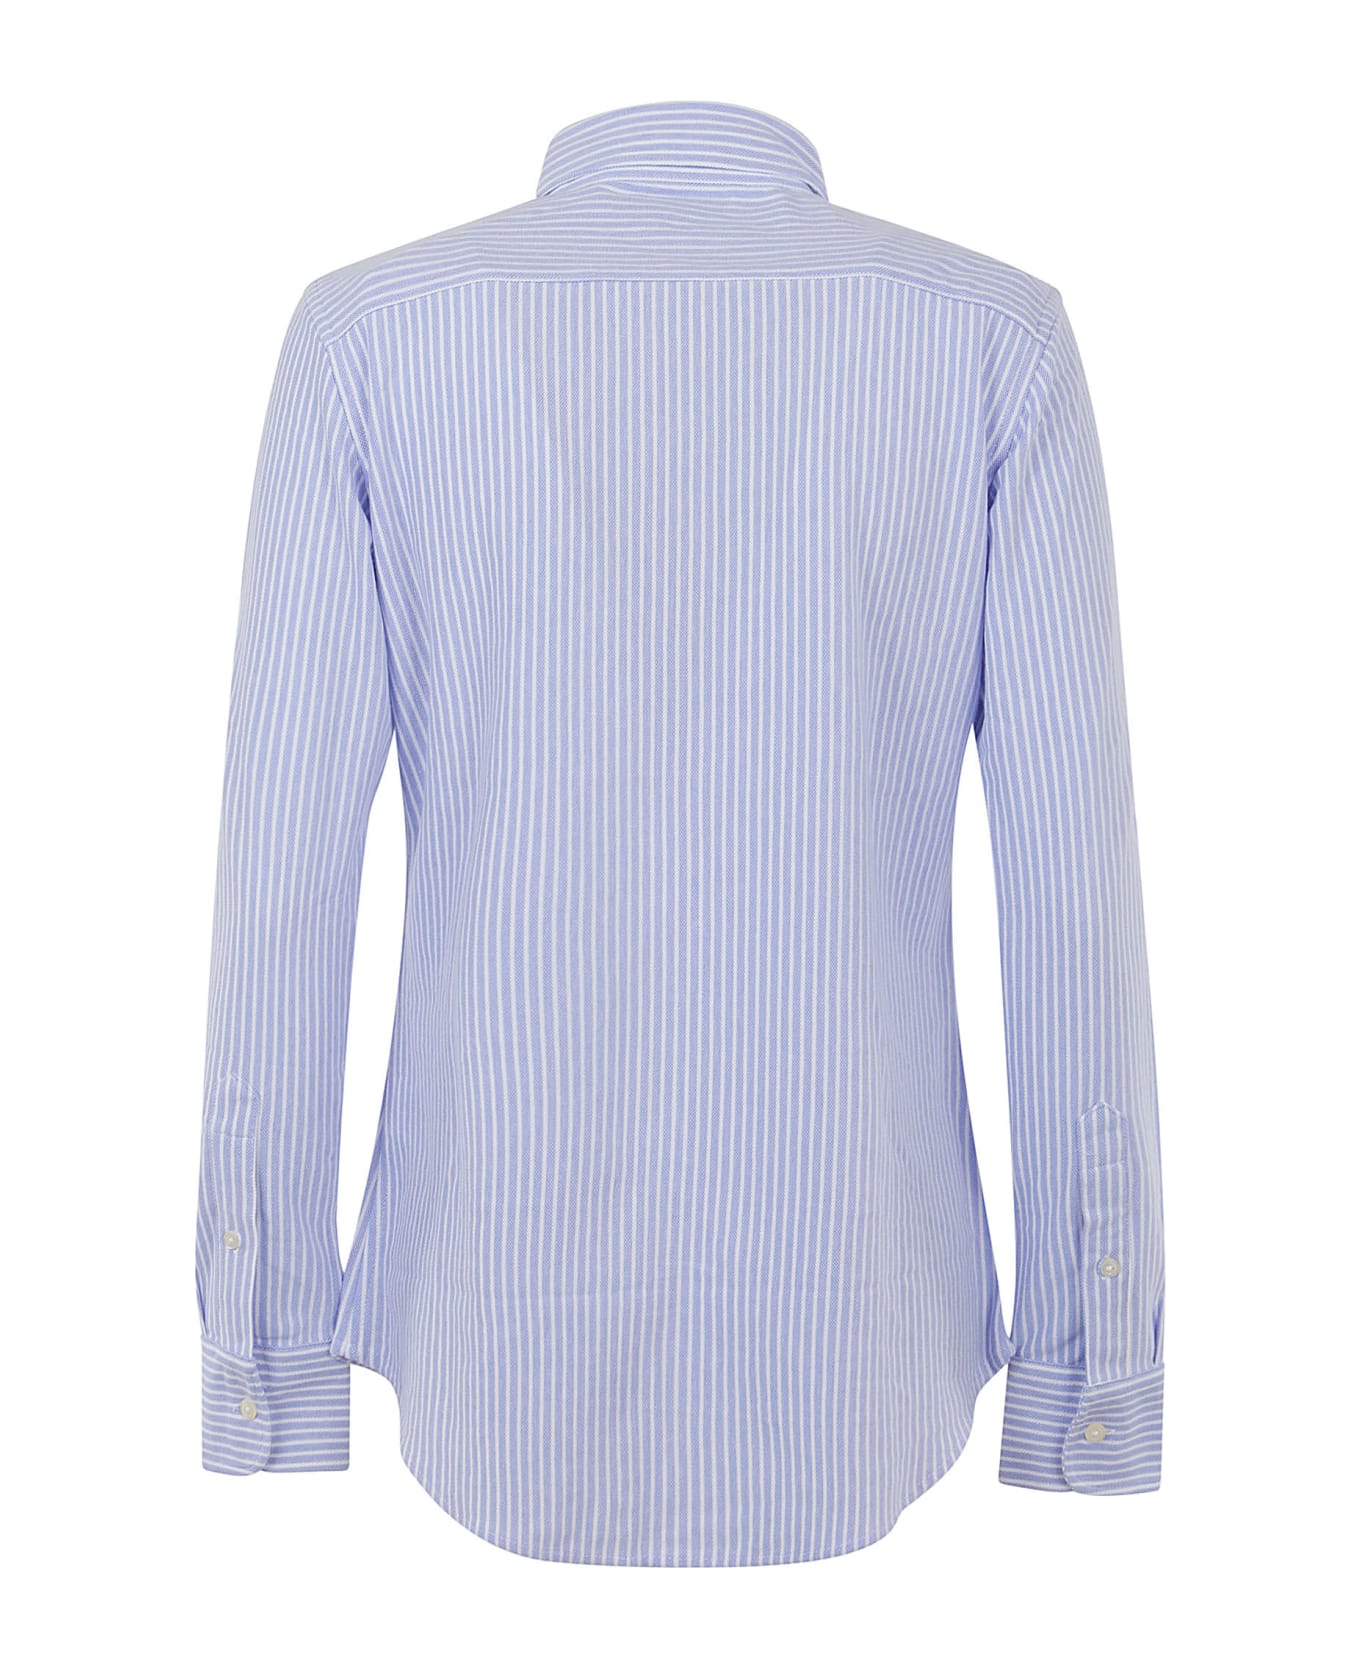 Ralph Lauren Ls Knt Oxfrd-long Sleeve-button Front Shirt - Harbor Island Blue White シャツ